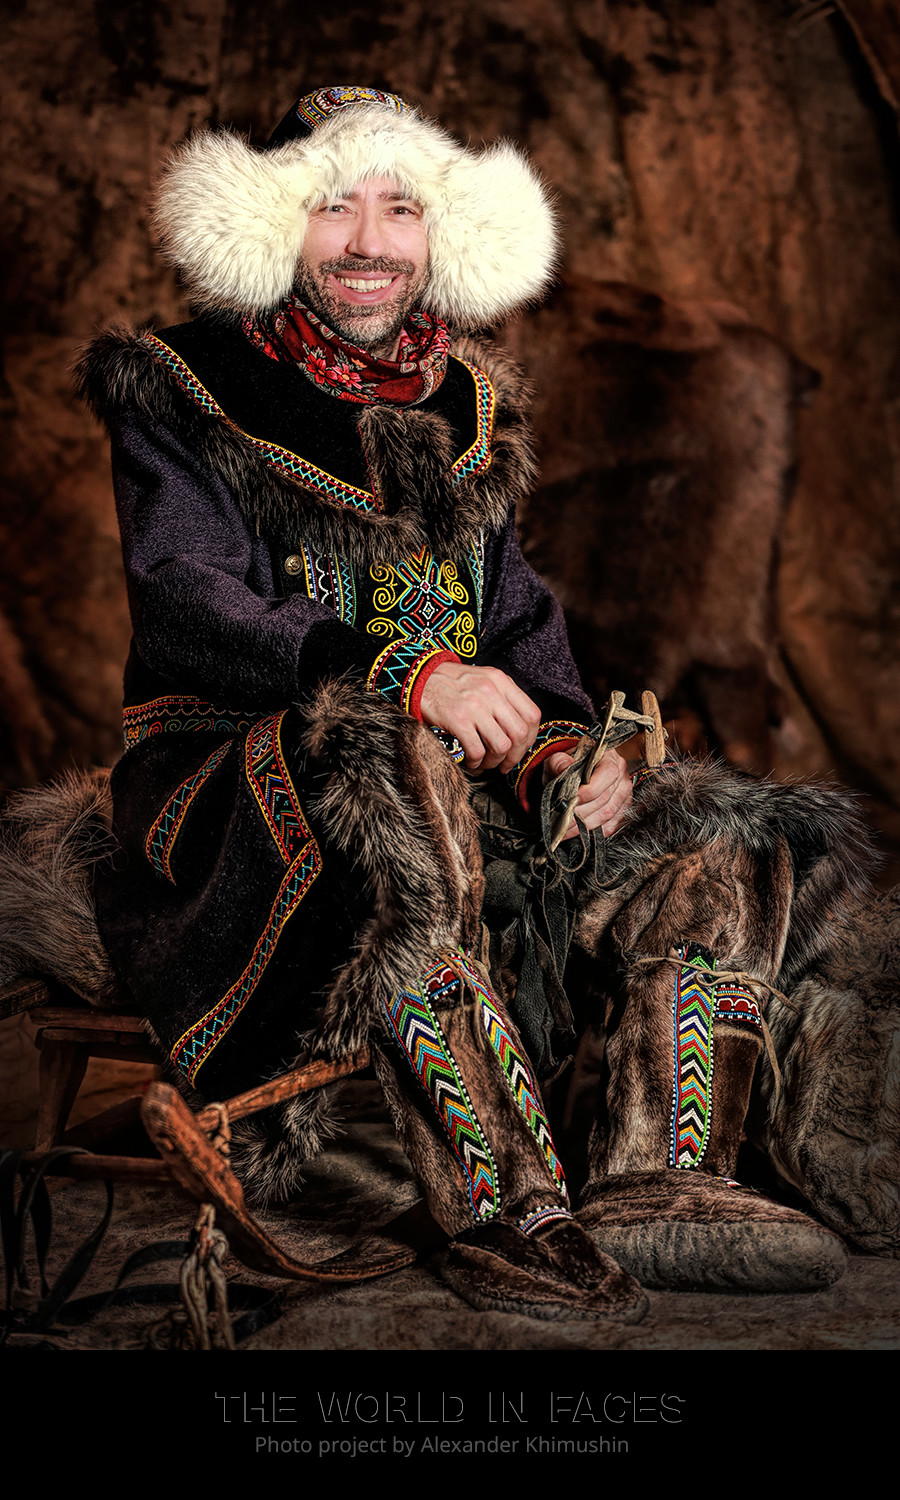 Alexander Khimushin in the traditional Dolgan costume.